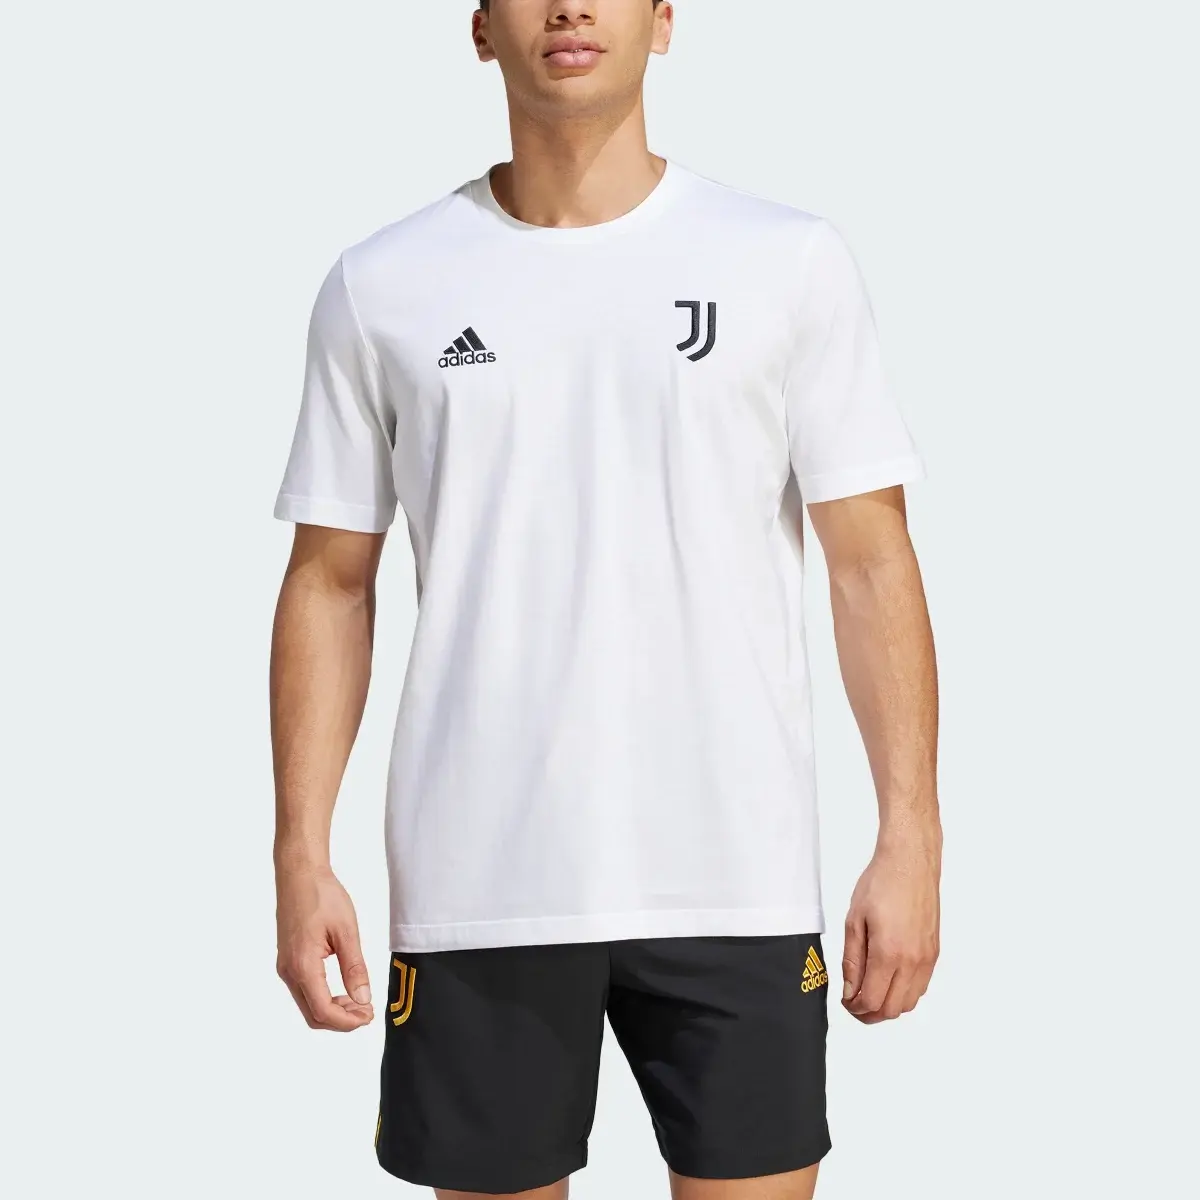 Adidas Juventus DNA T-Shirt. 1